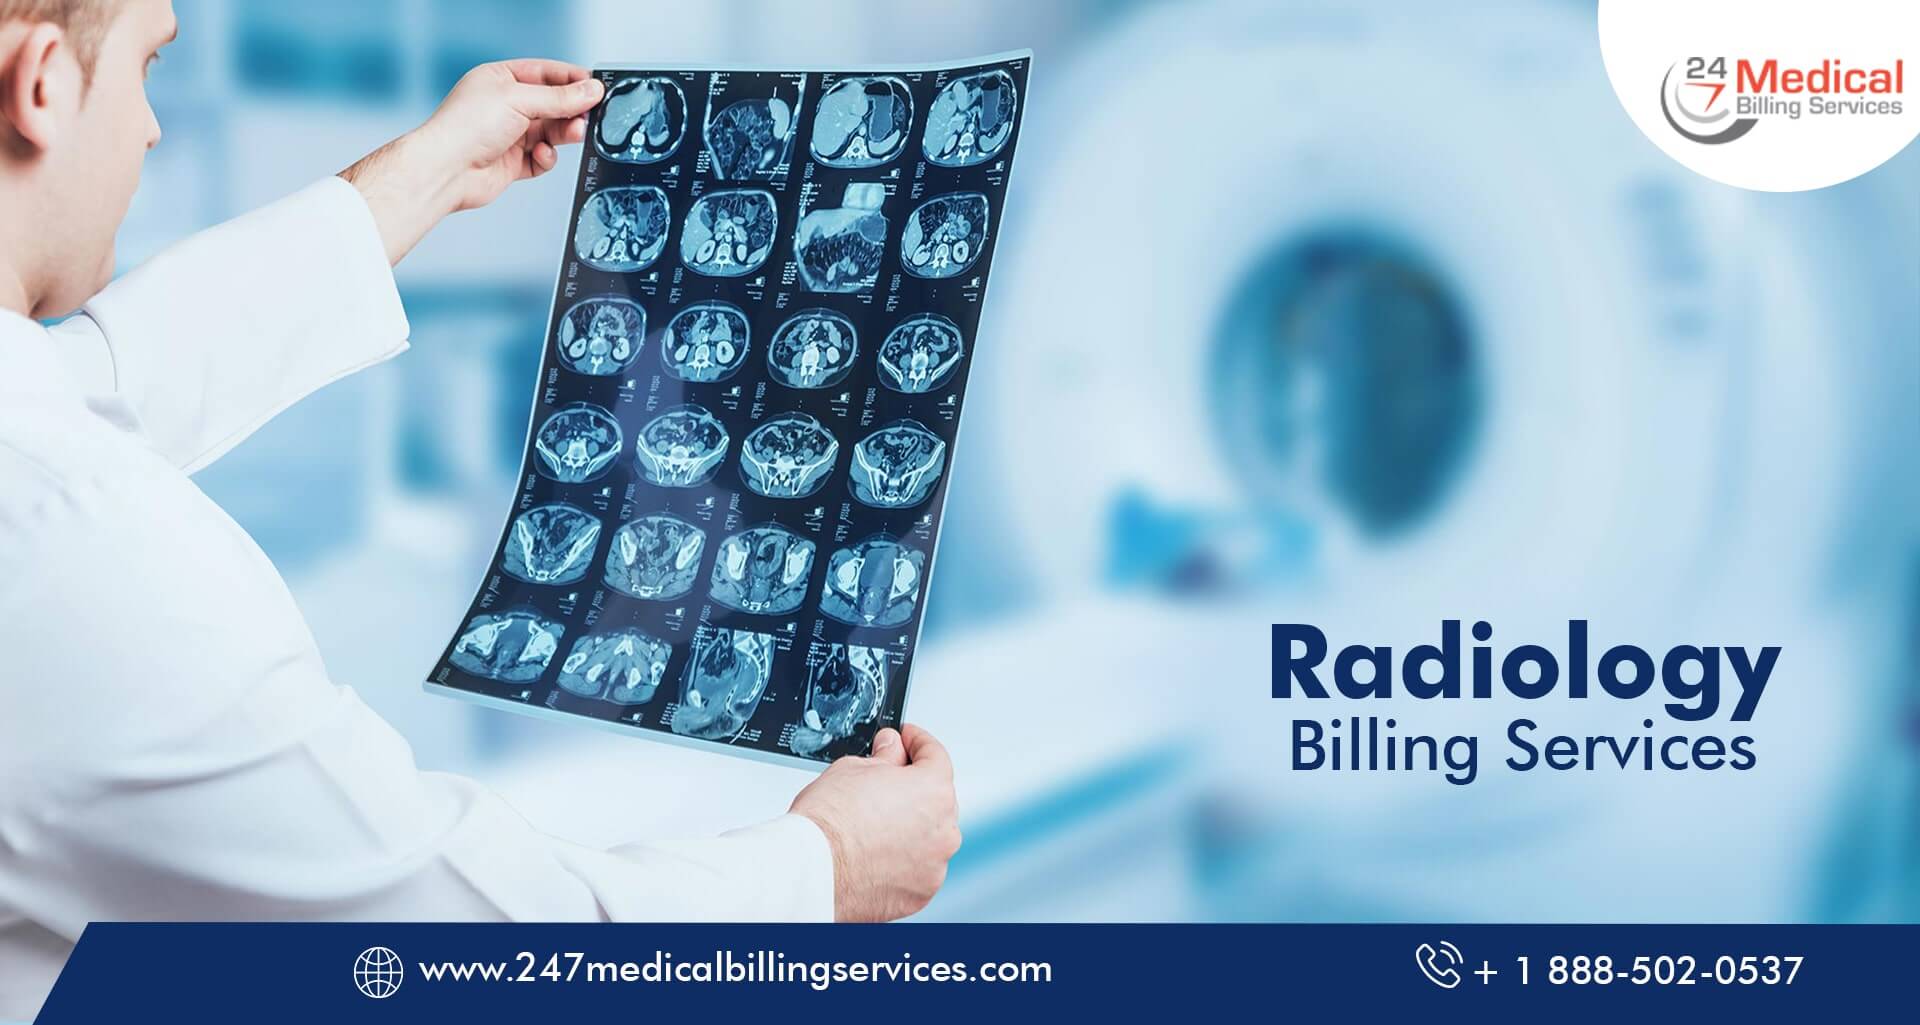 Radiology Billing Services in Philadelphia, Pennsylvania (PA) - 24/7 Medical Billing Services